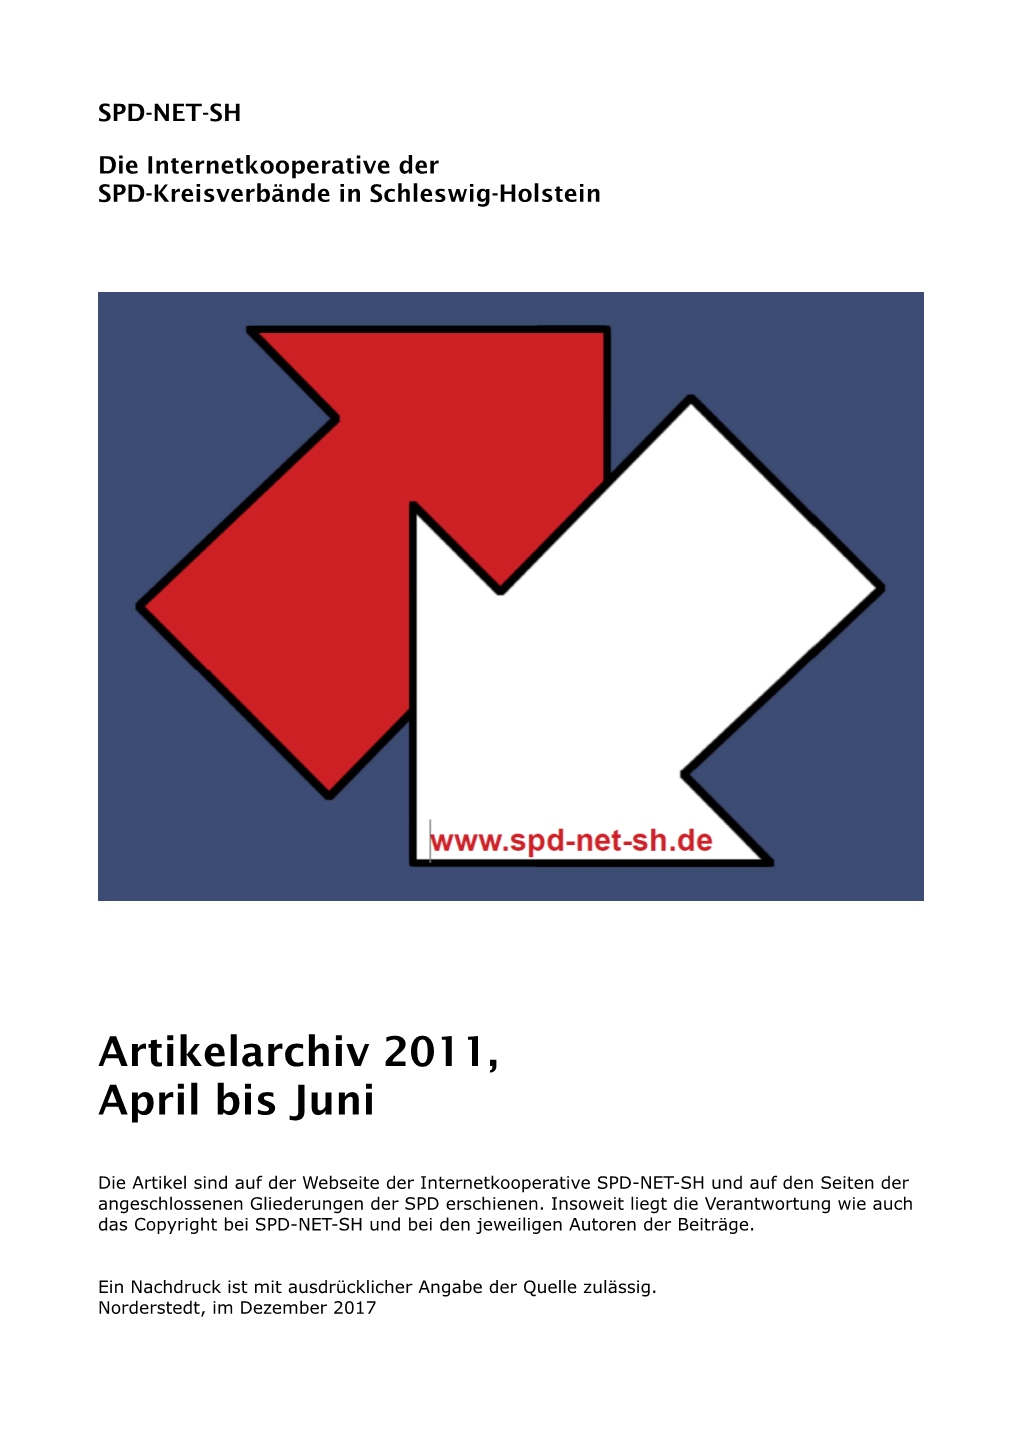 Artikelarchiv 2011, April Bis Juni